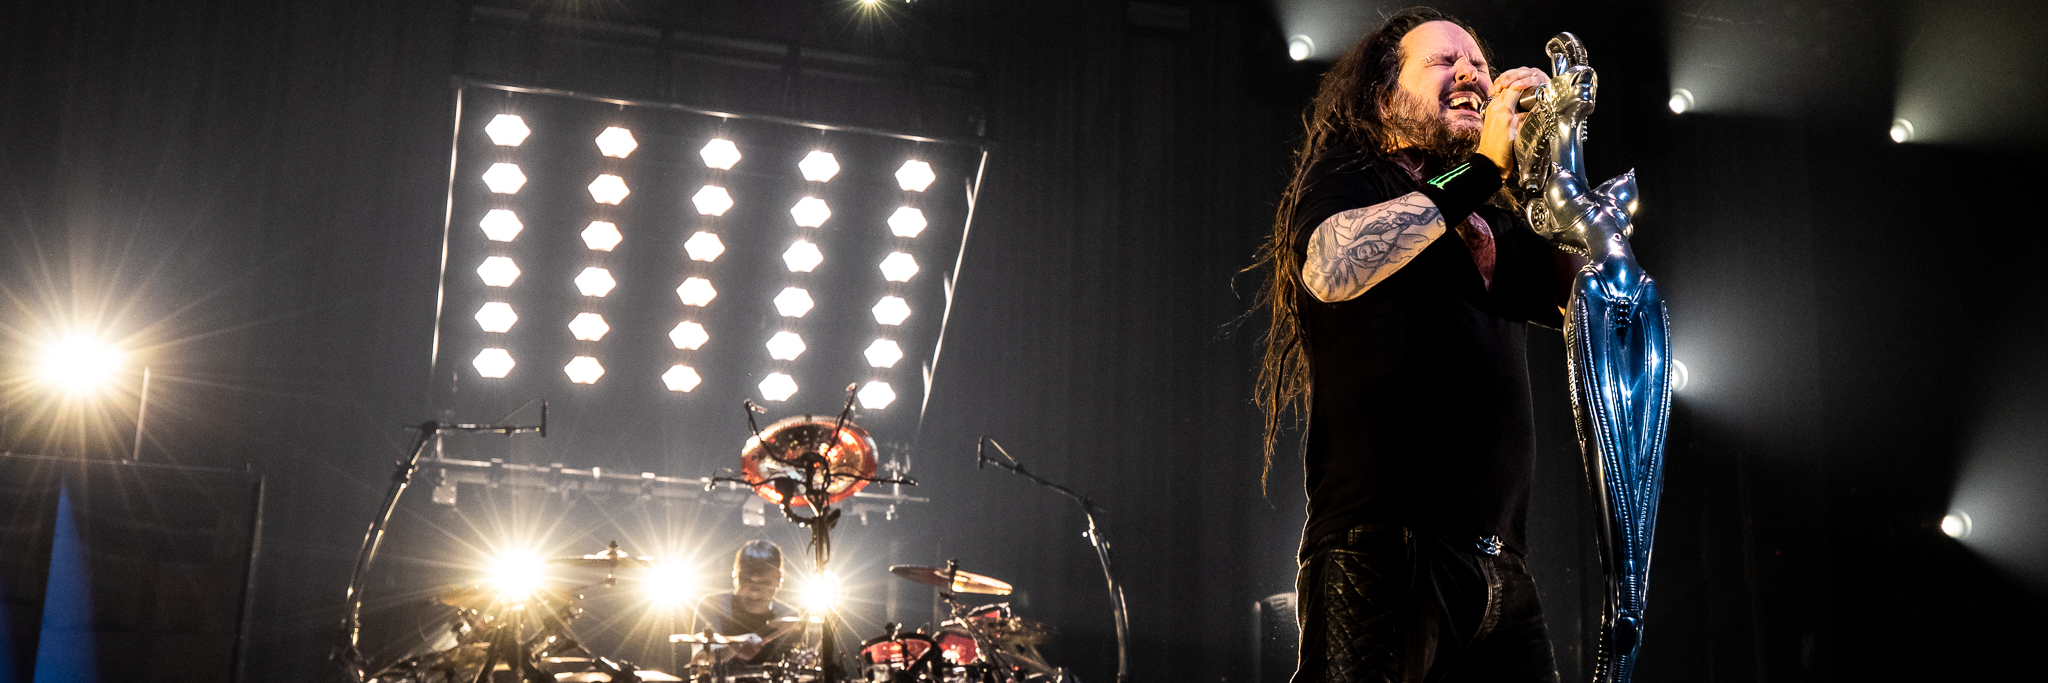 Korn, Breaking Benjamin Packing Big Rooms With Bones UK On 2020 Tour